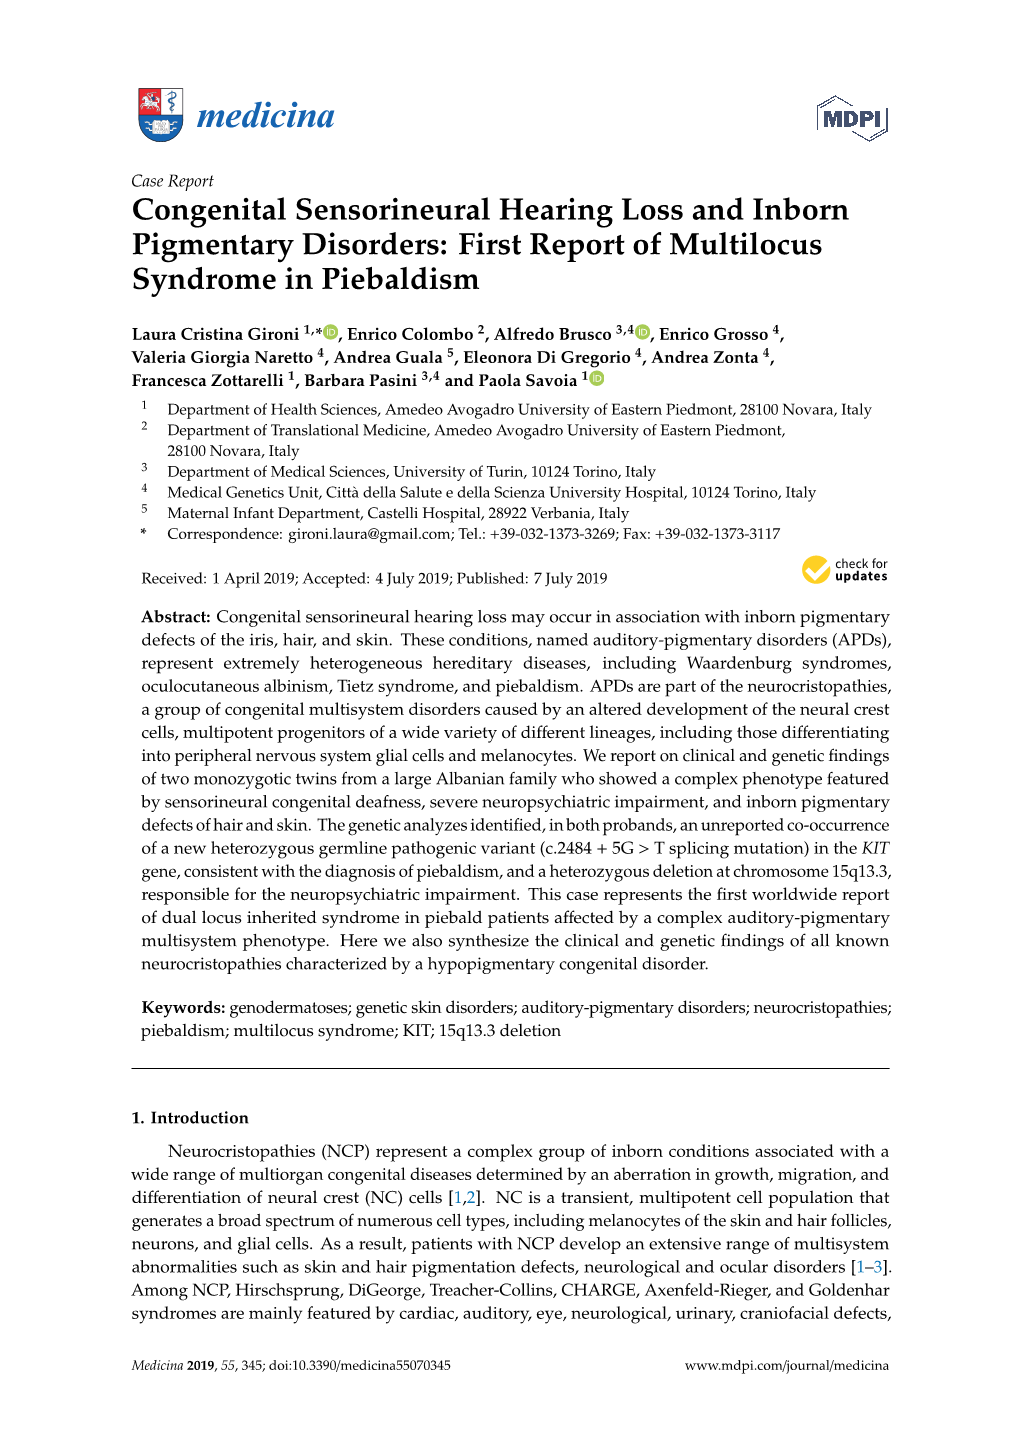 Congenital Sensorineural Hearing Loss and Inborn Pigmentary Disorders: First Report of Multilocus Syndrome in Piebaldism